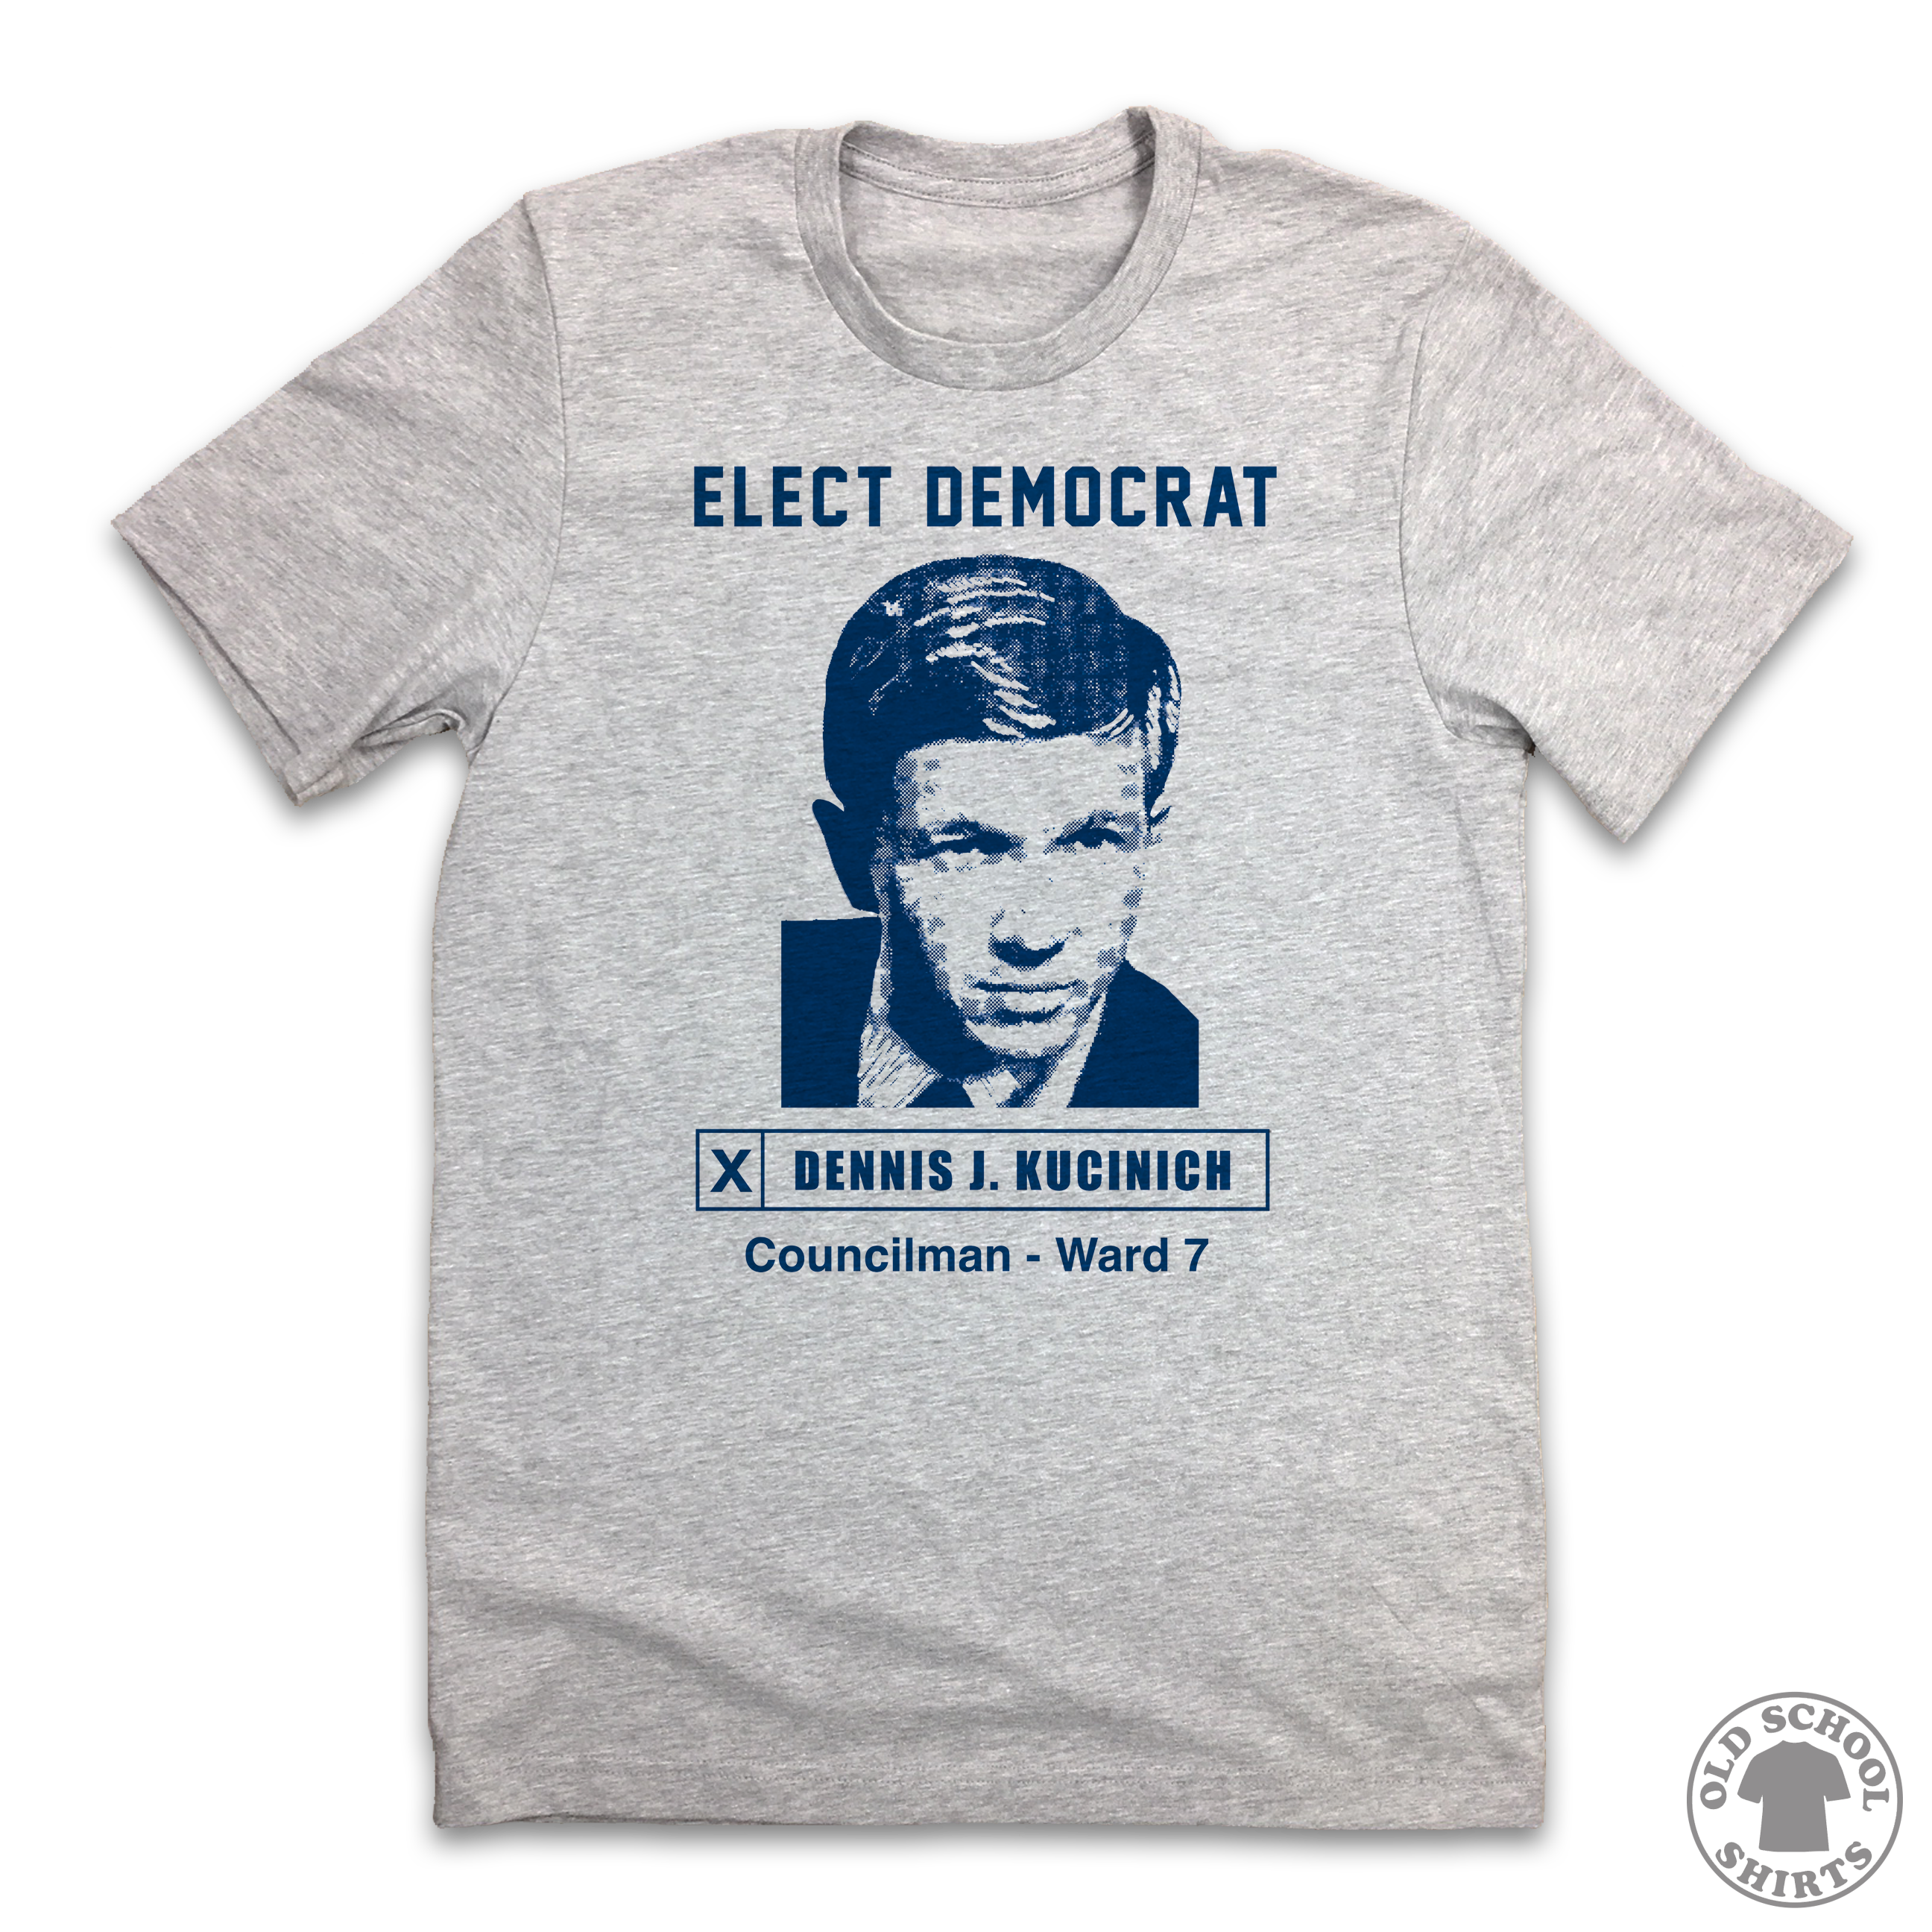 Elect Dennis J. Kucinich Mayor - Old School Shirts- Retro Sports T Shirts